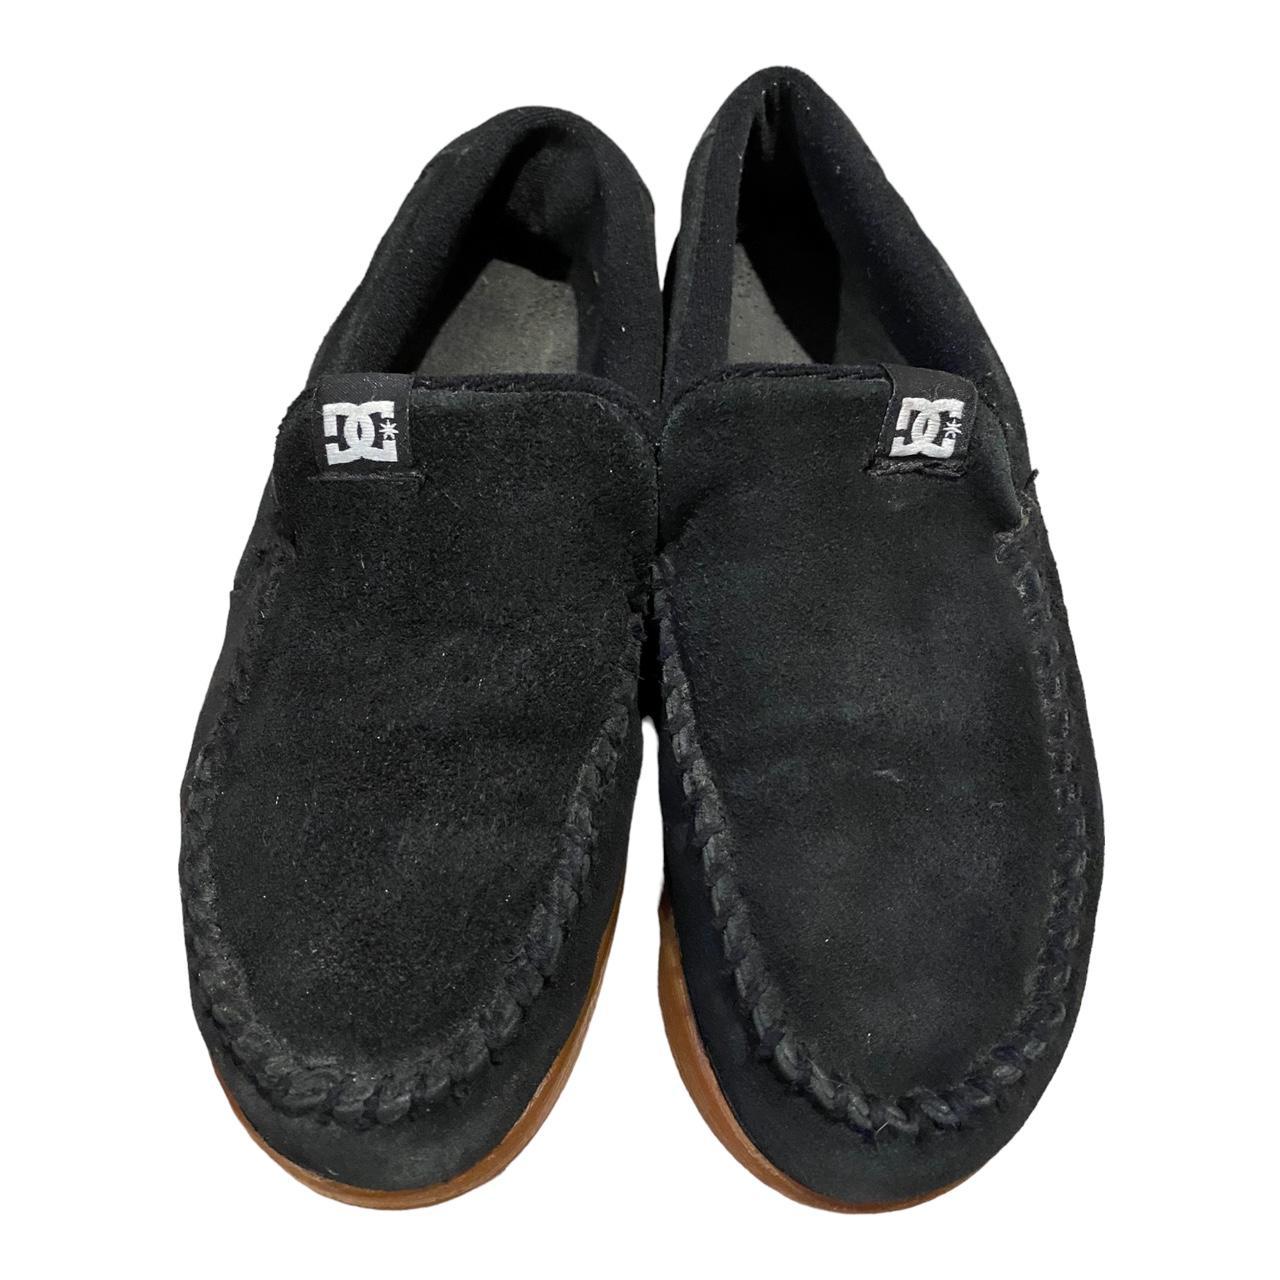 DC Men's Villain TX Slip-on Skate Shoes Black Size... - Depop